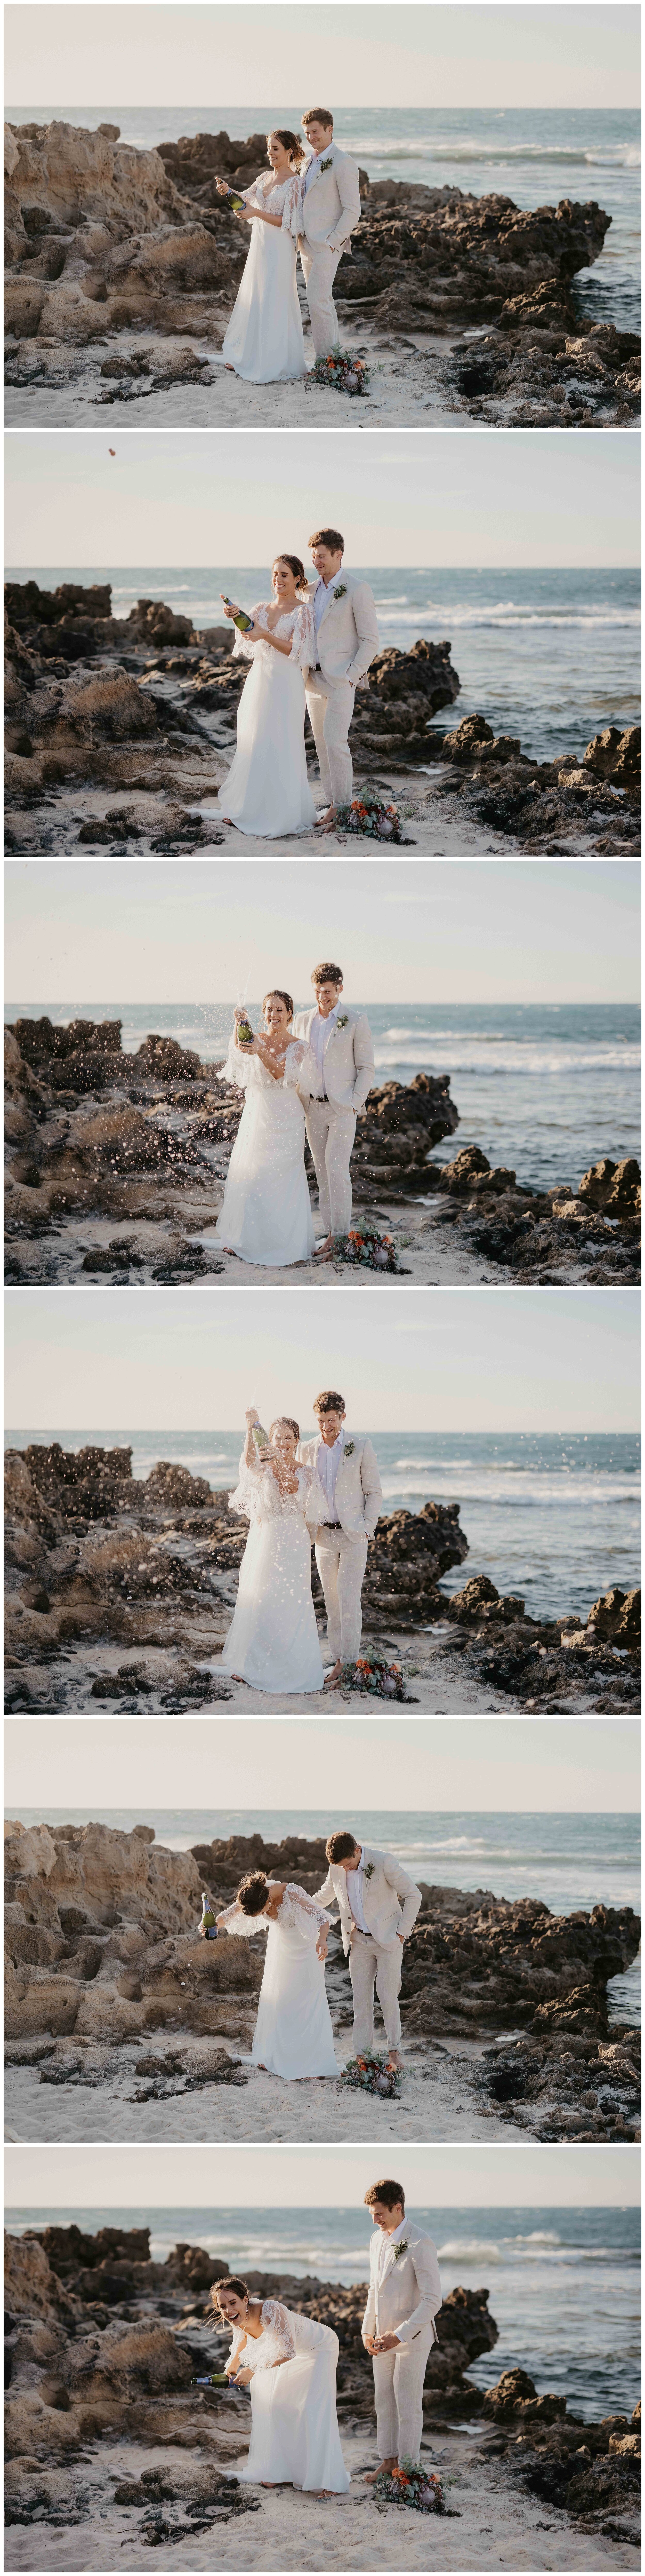 trigg beach wedding amy skinner photography-820.jpg